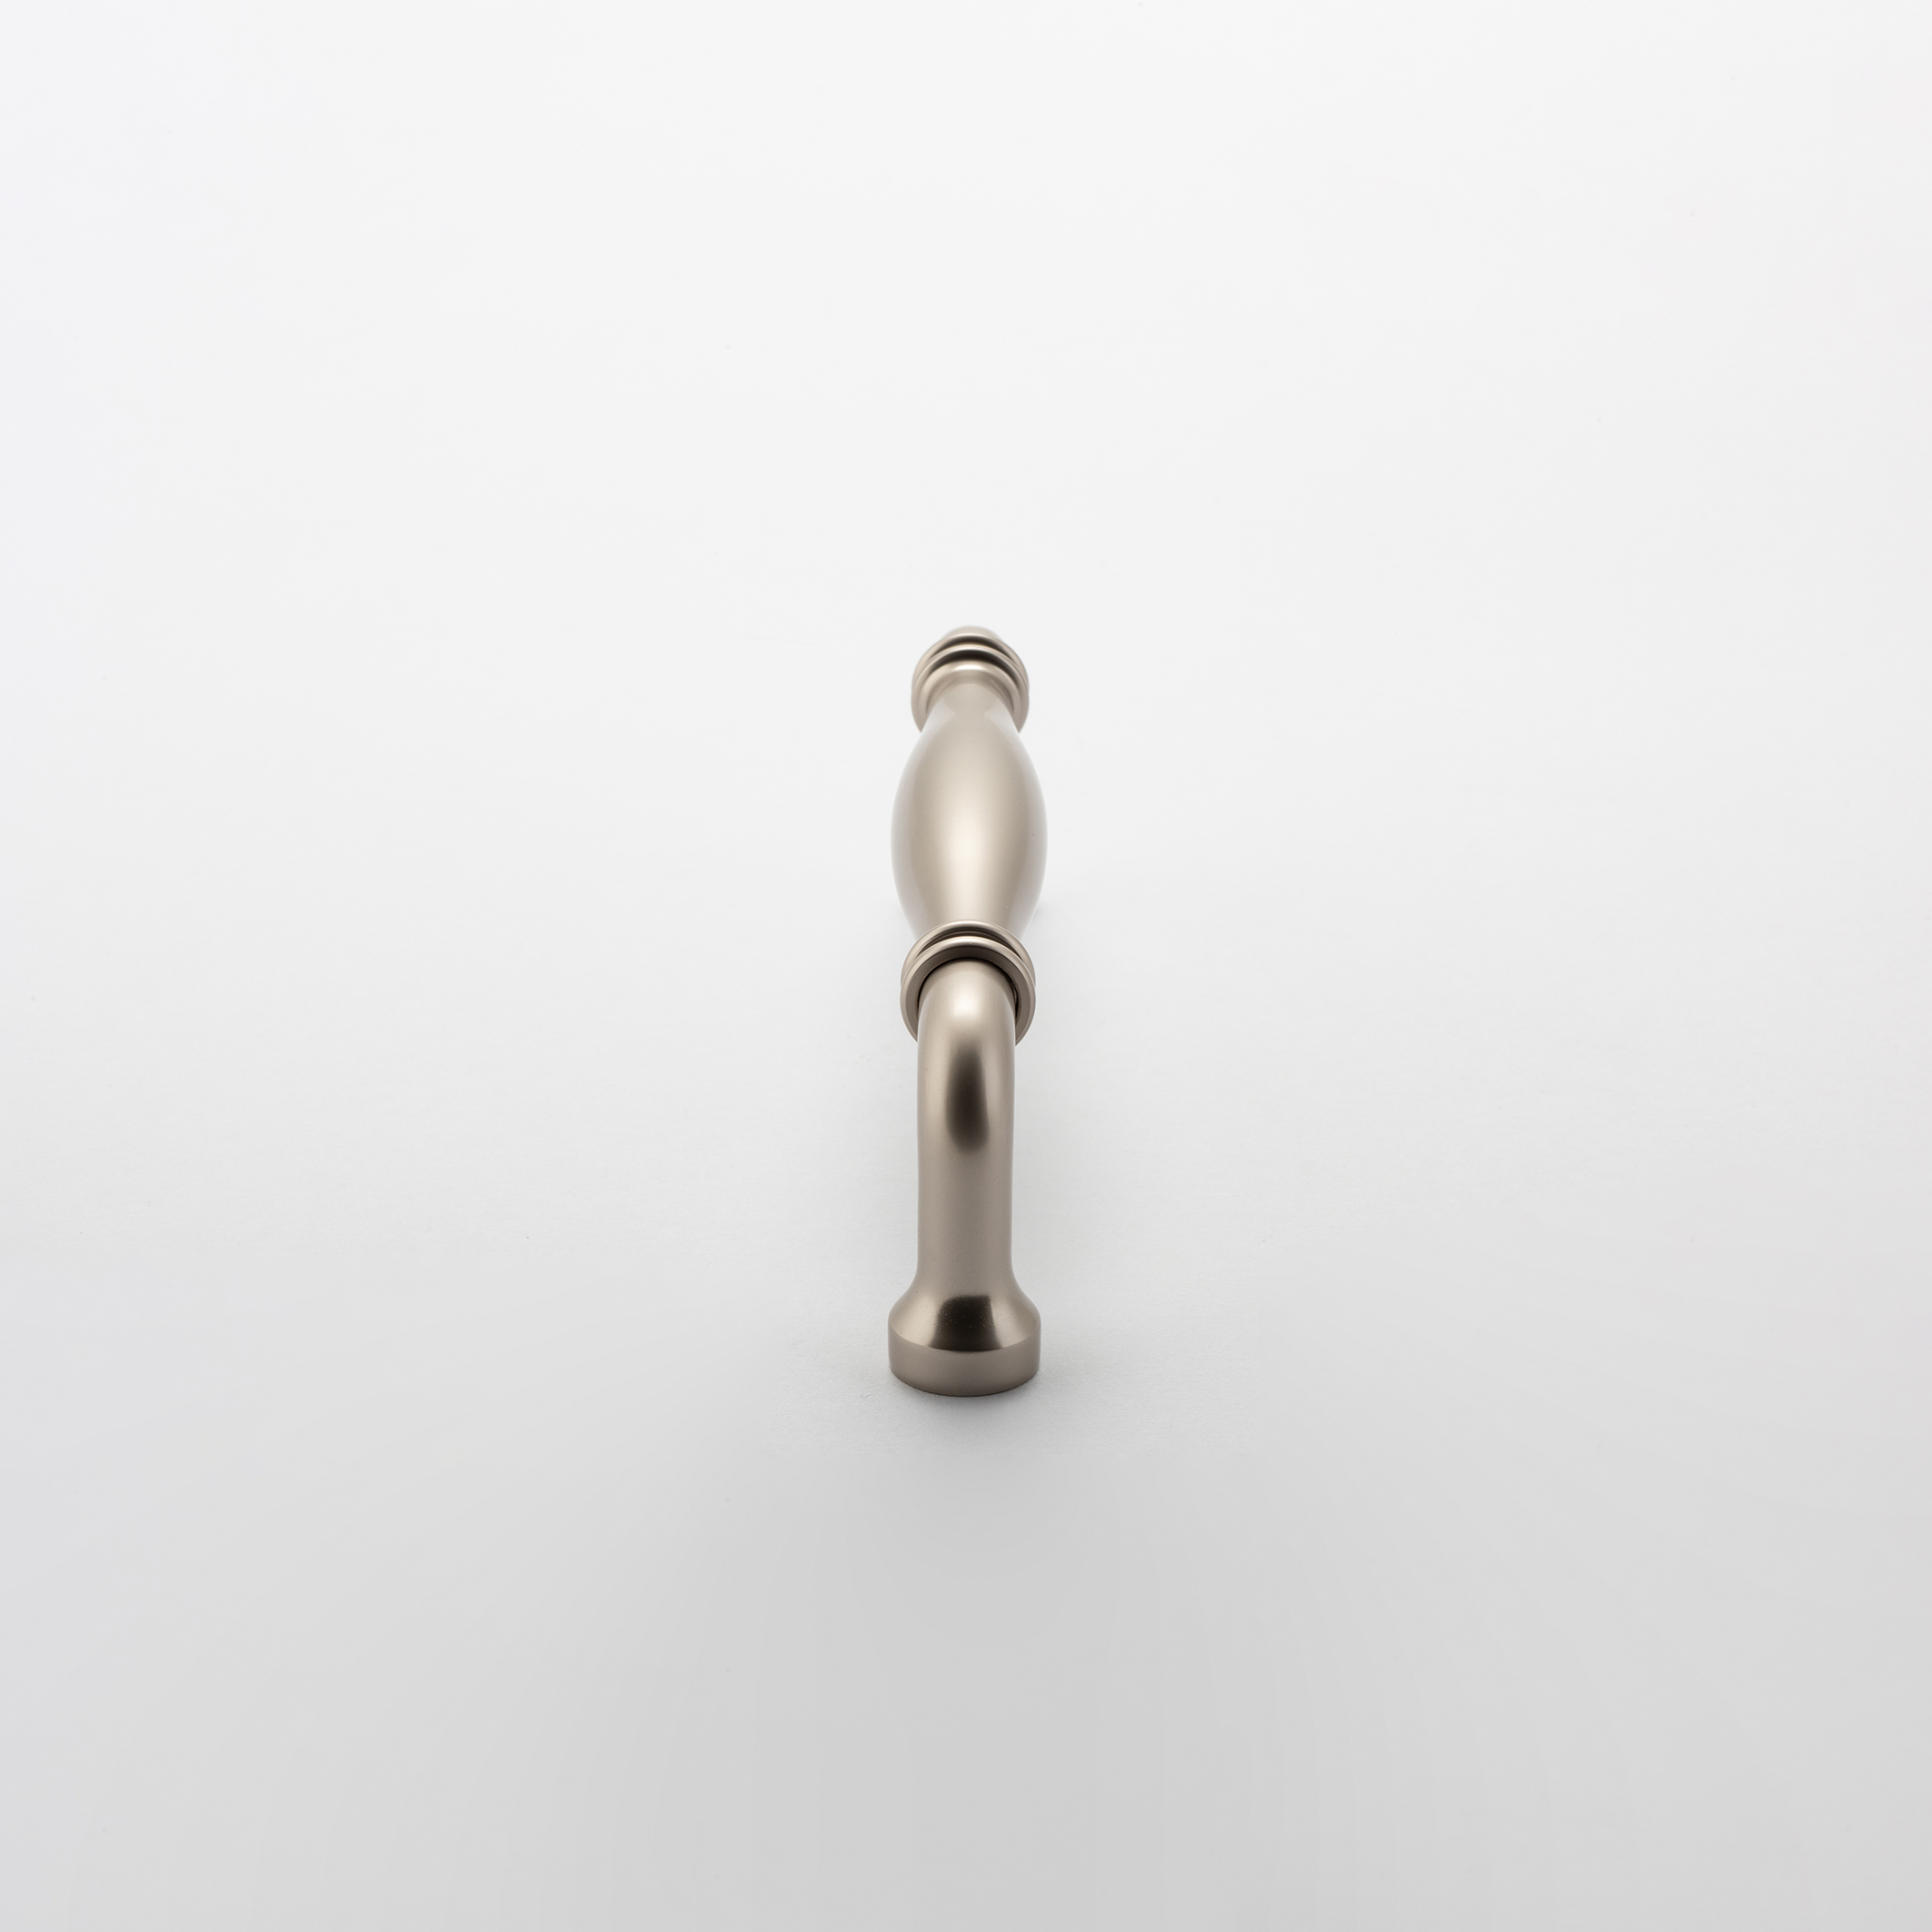 21069 - Sarlat Cabinet Pull - CTC128mm - Satin Nickel